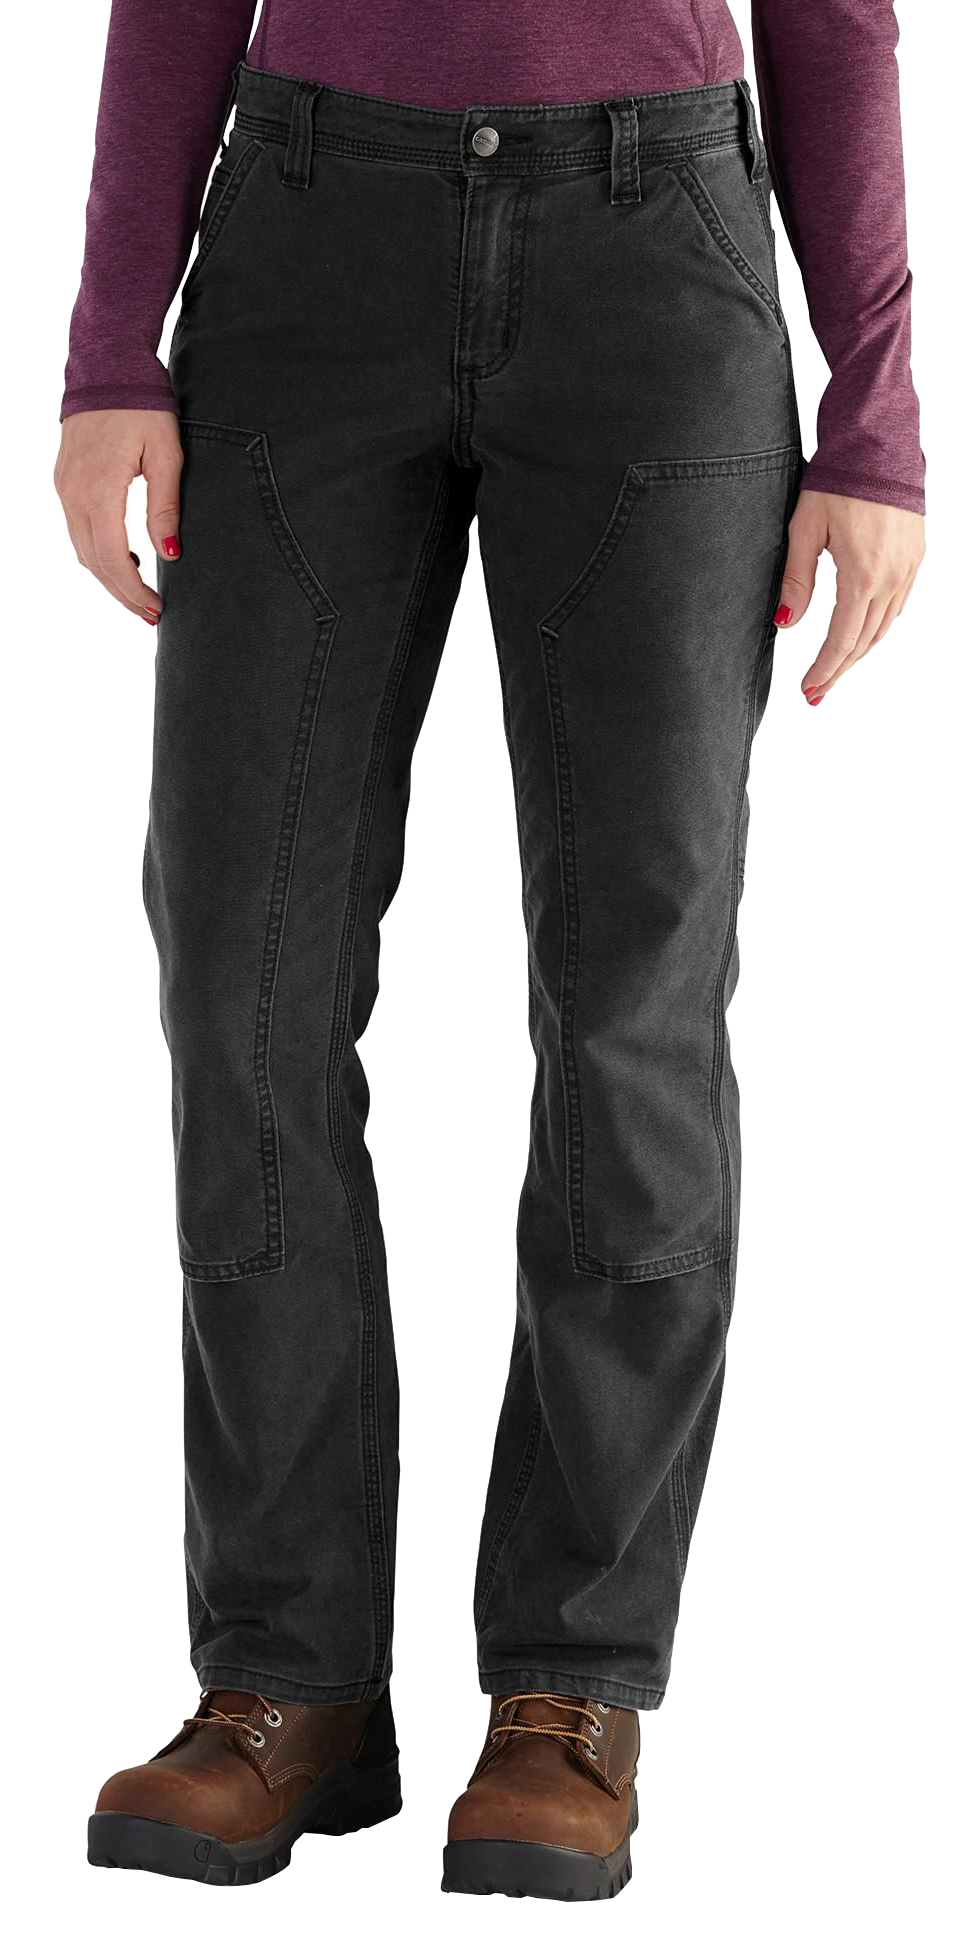 Carhartt Women's Slim Fit Crawford Double Front Pant - Choose SZ